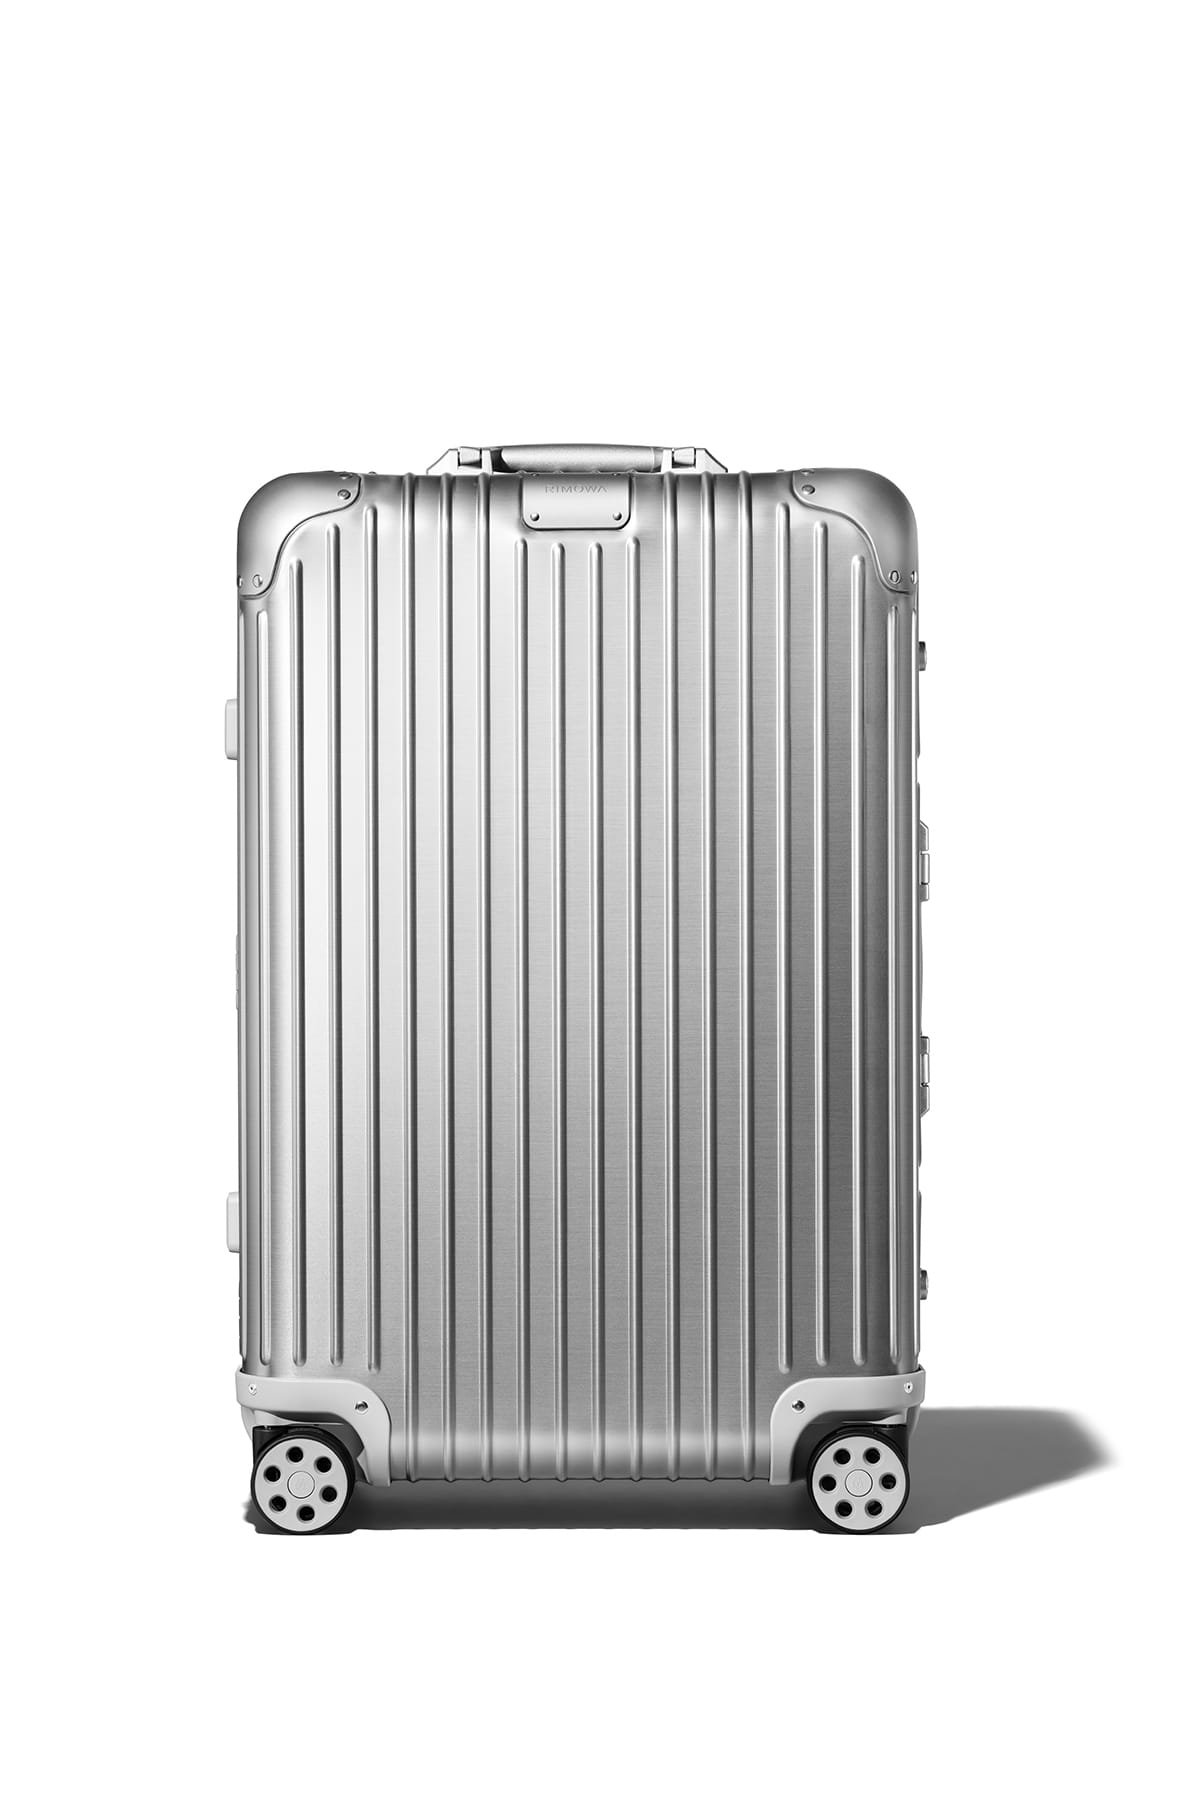 rimowa luggage logo